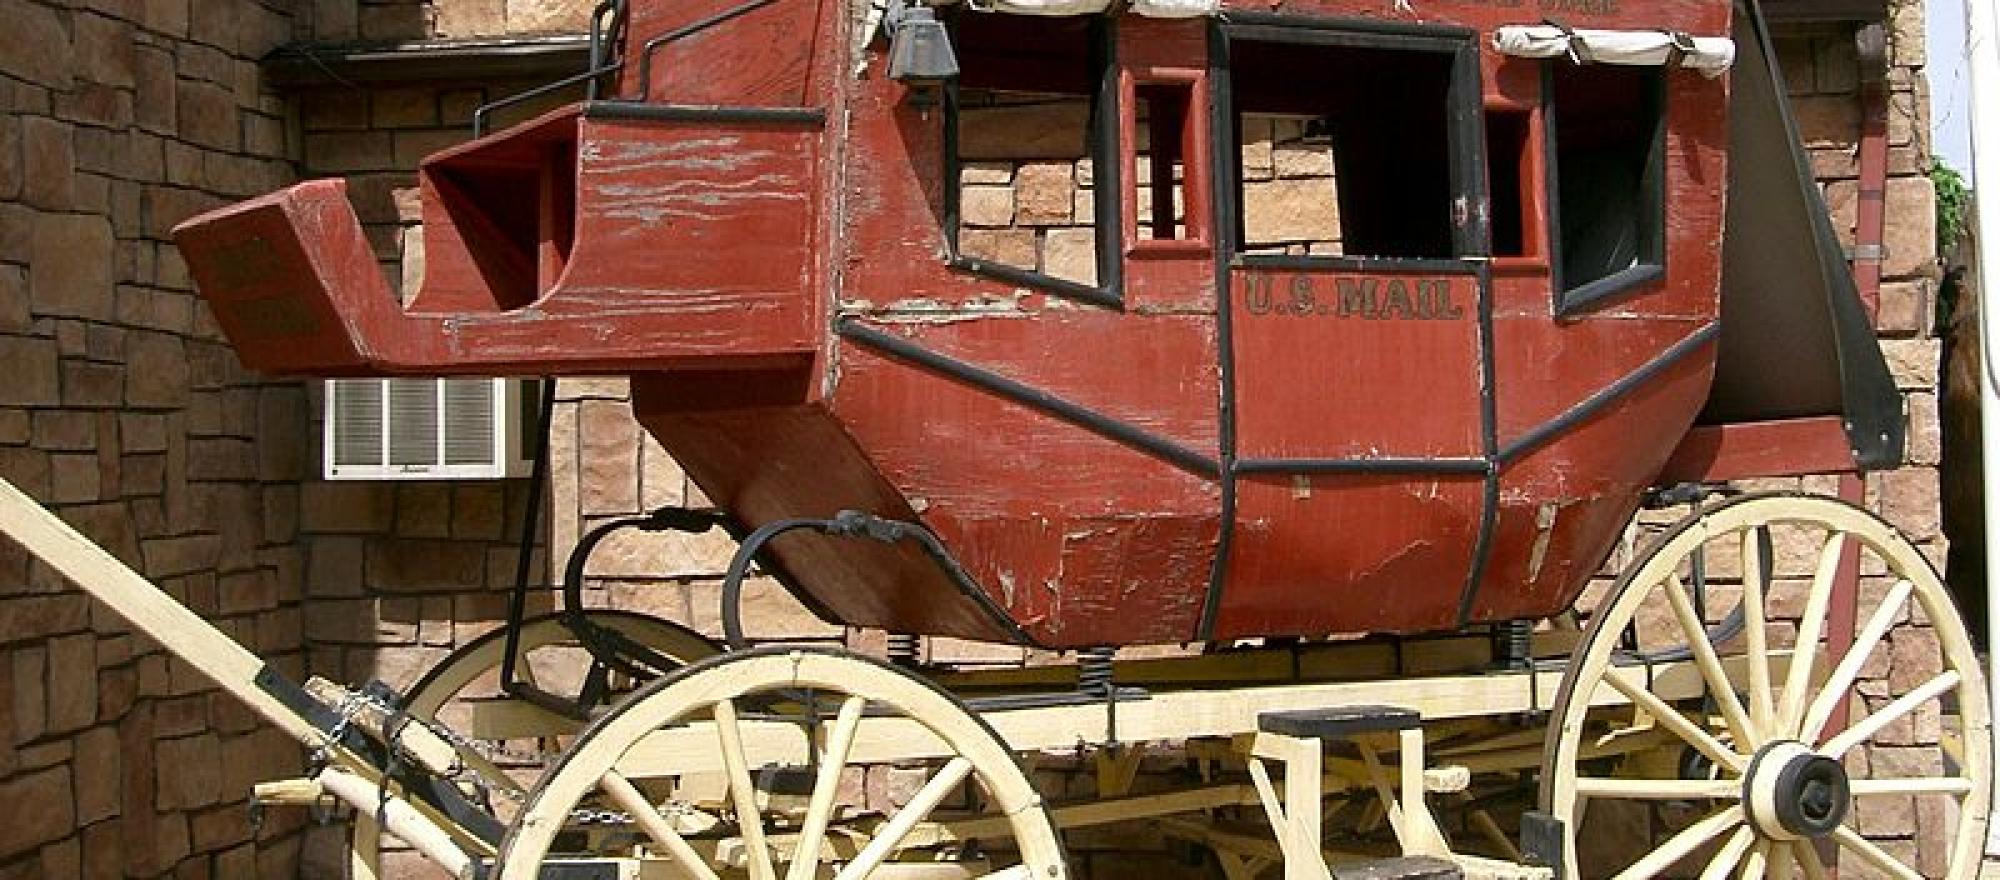 A Wells Fargo stagecoach